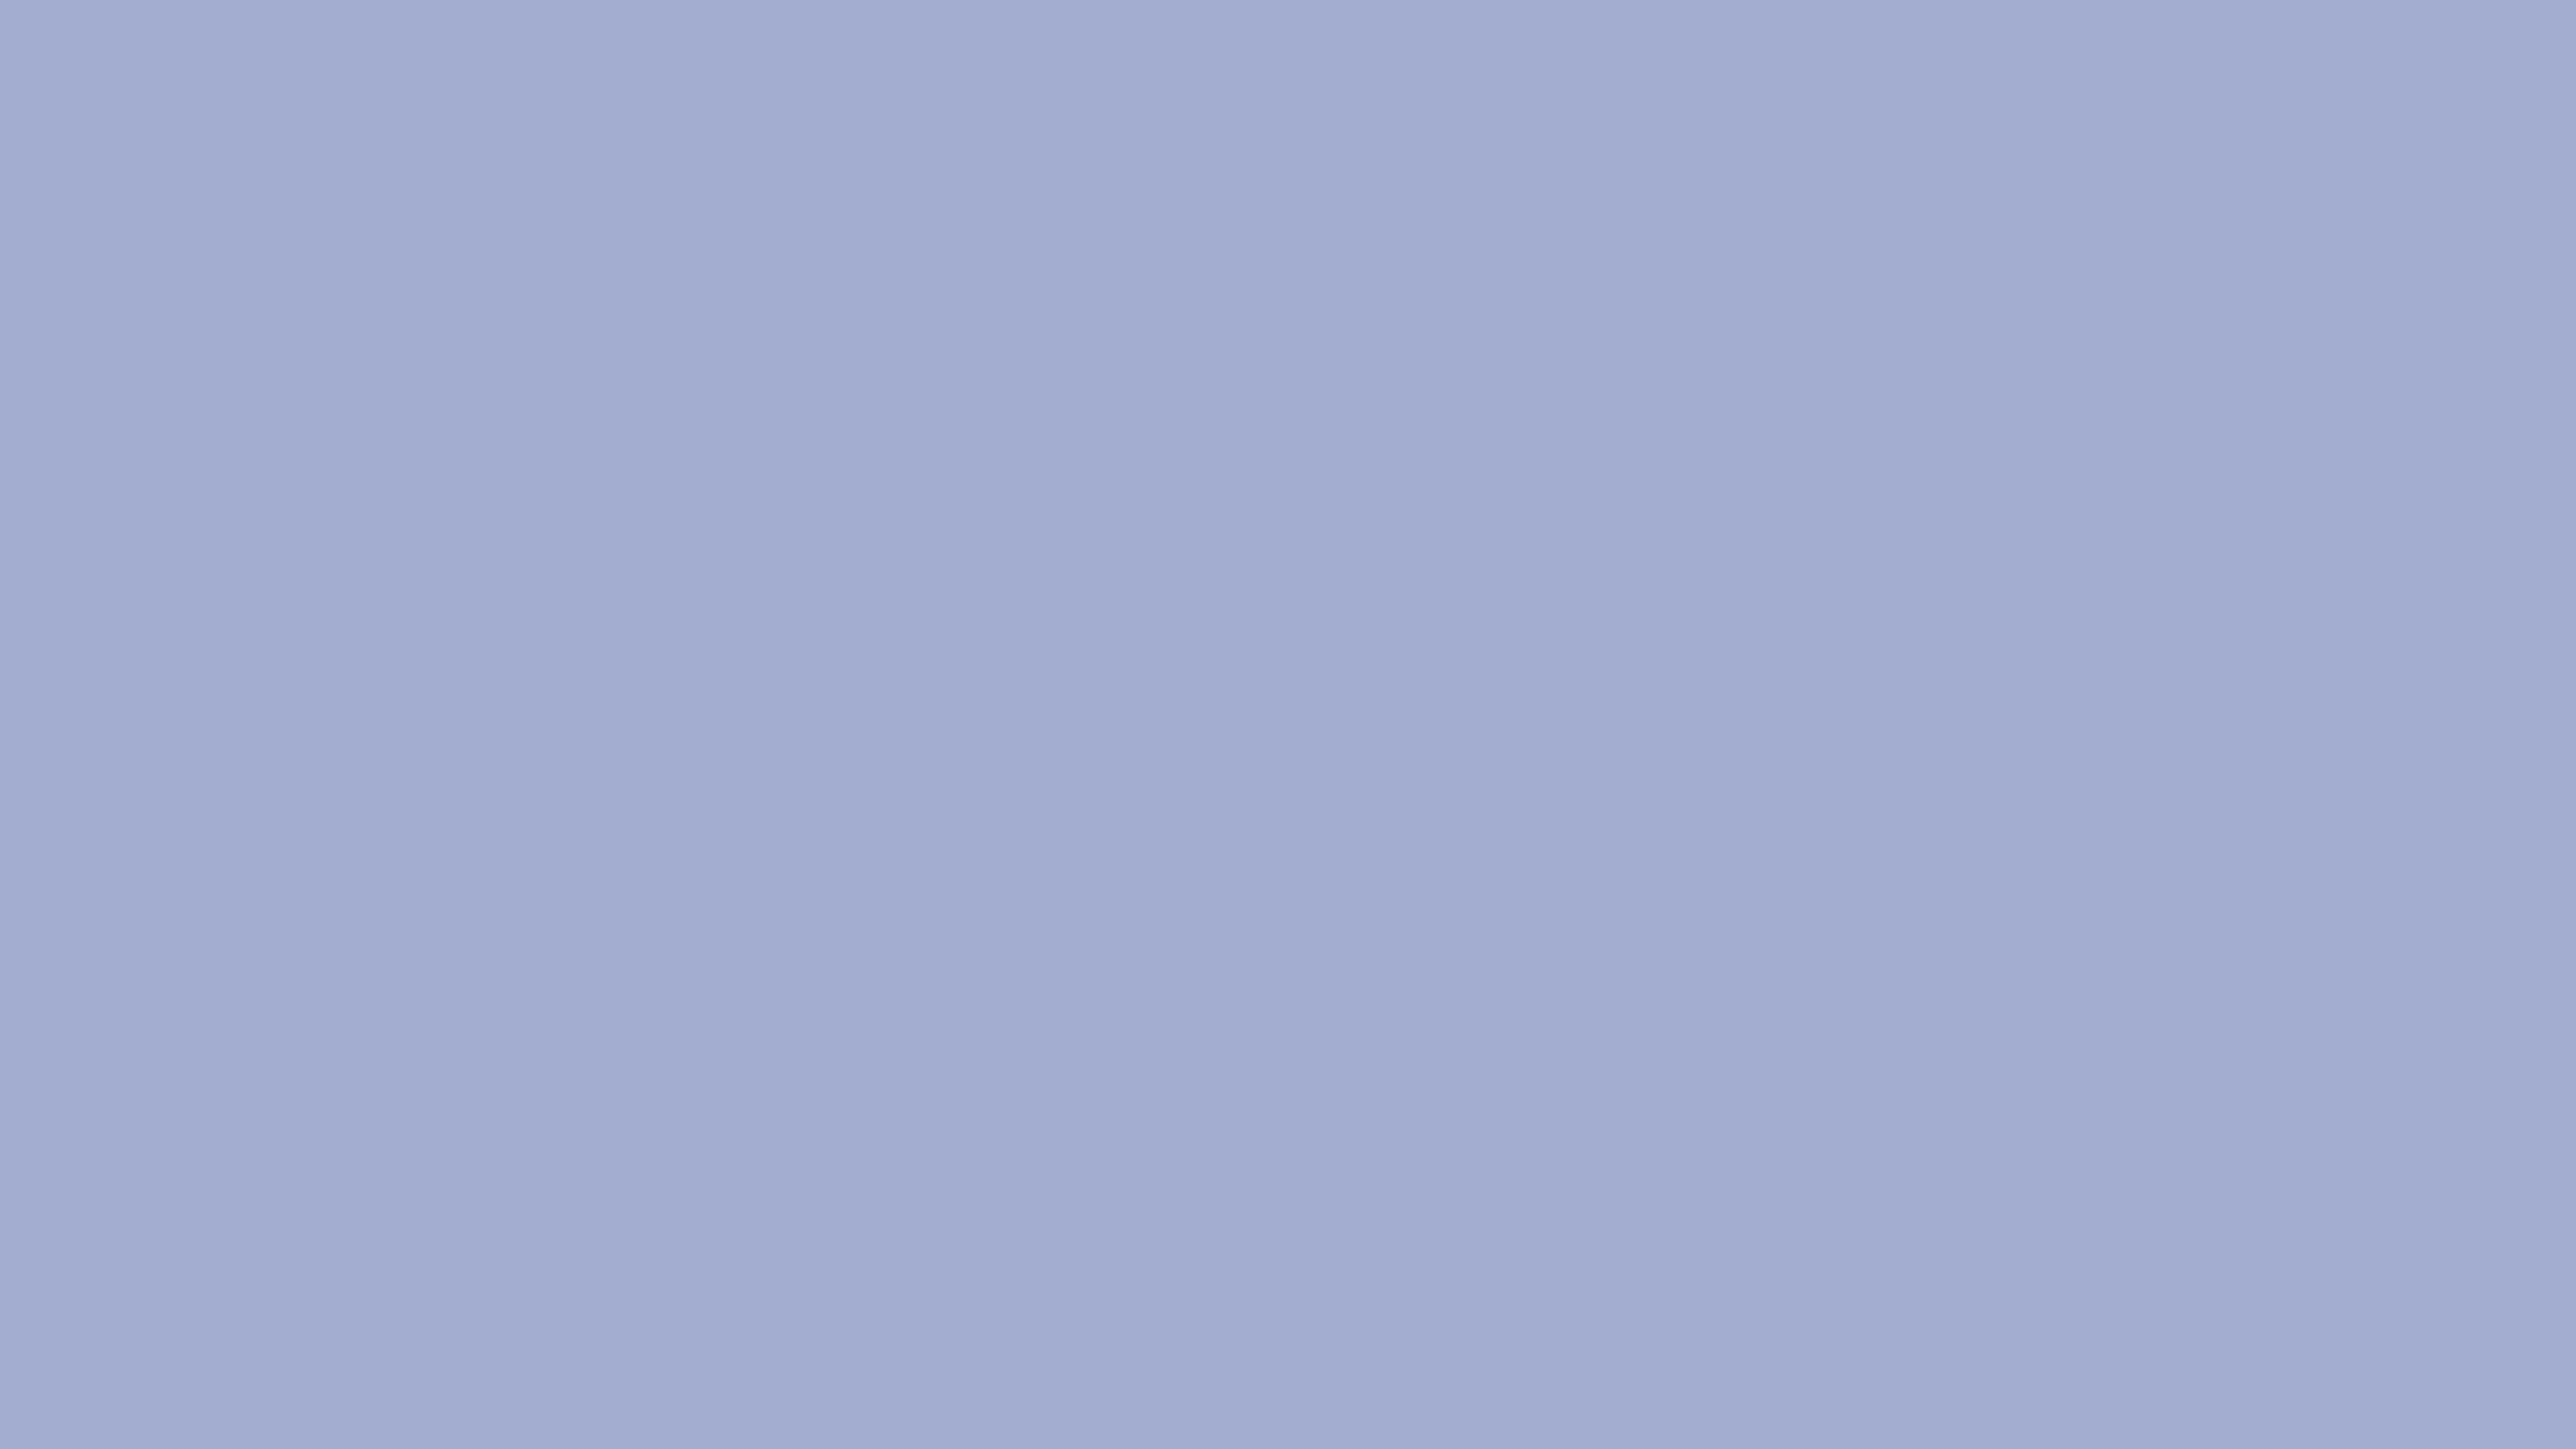 5120x2880 Wild Blue Yonder Solid Color Background